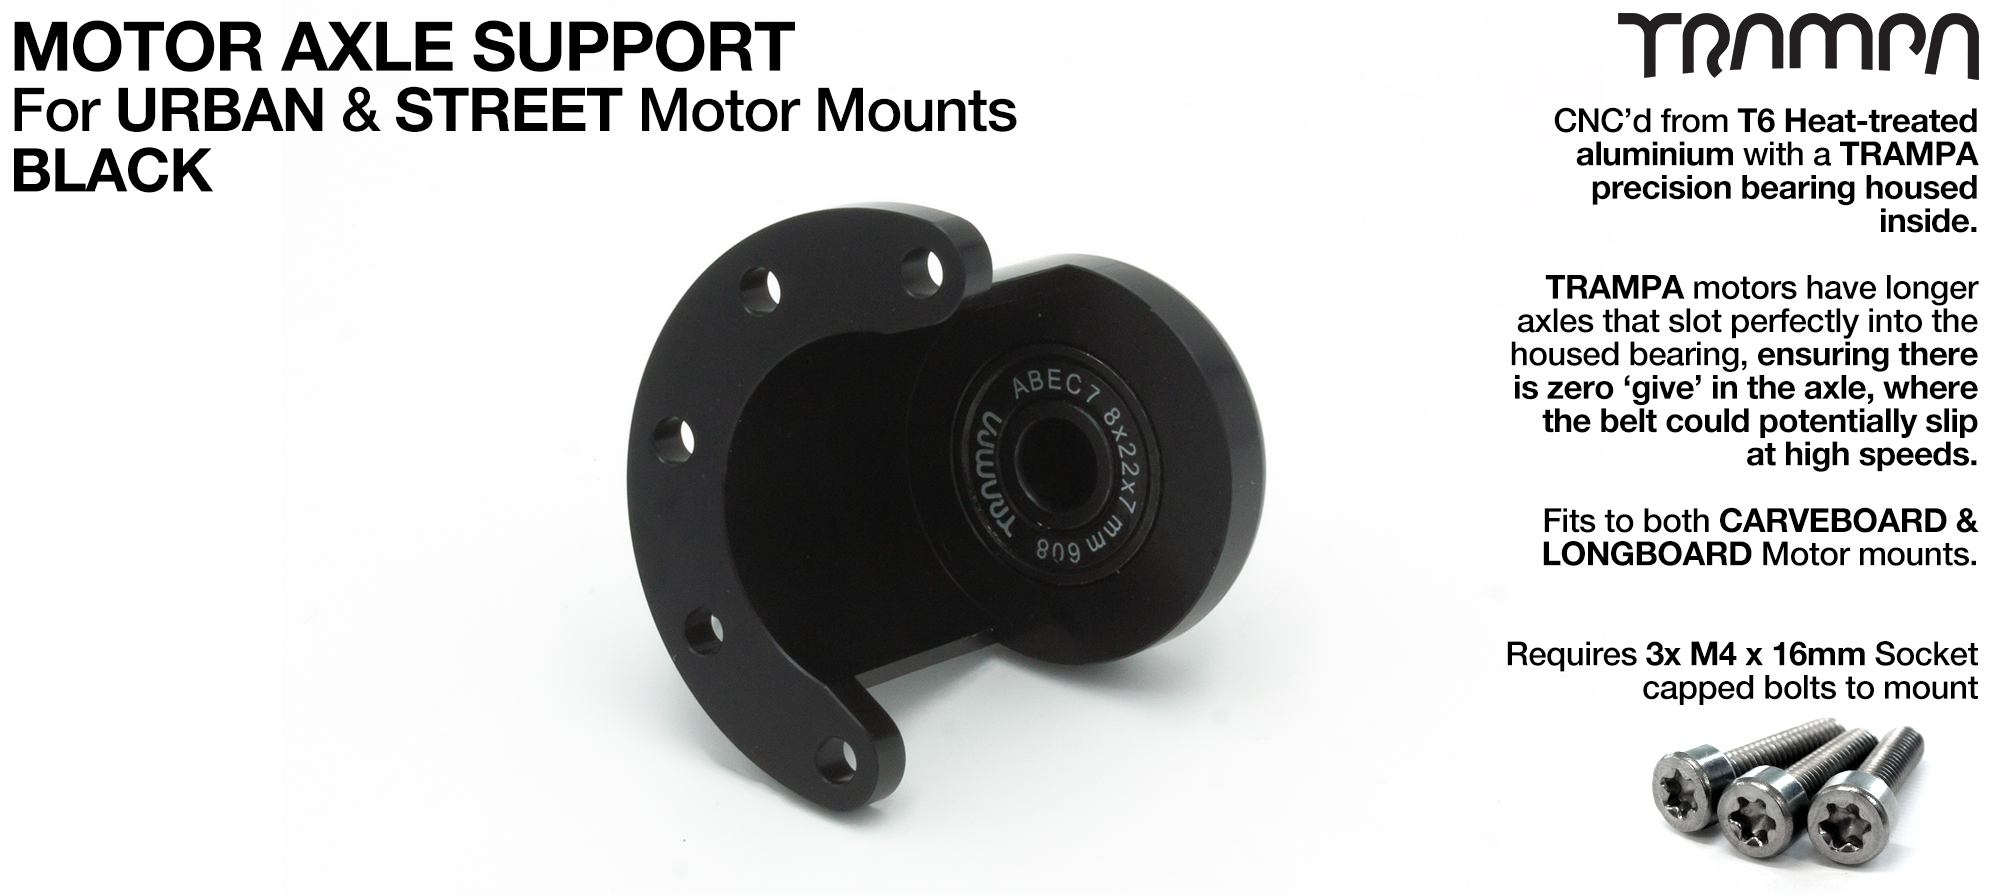 CARVE BOARD Motor Axle Support for Motor Mounts  - BLACK